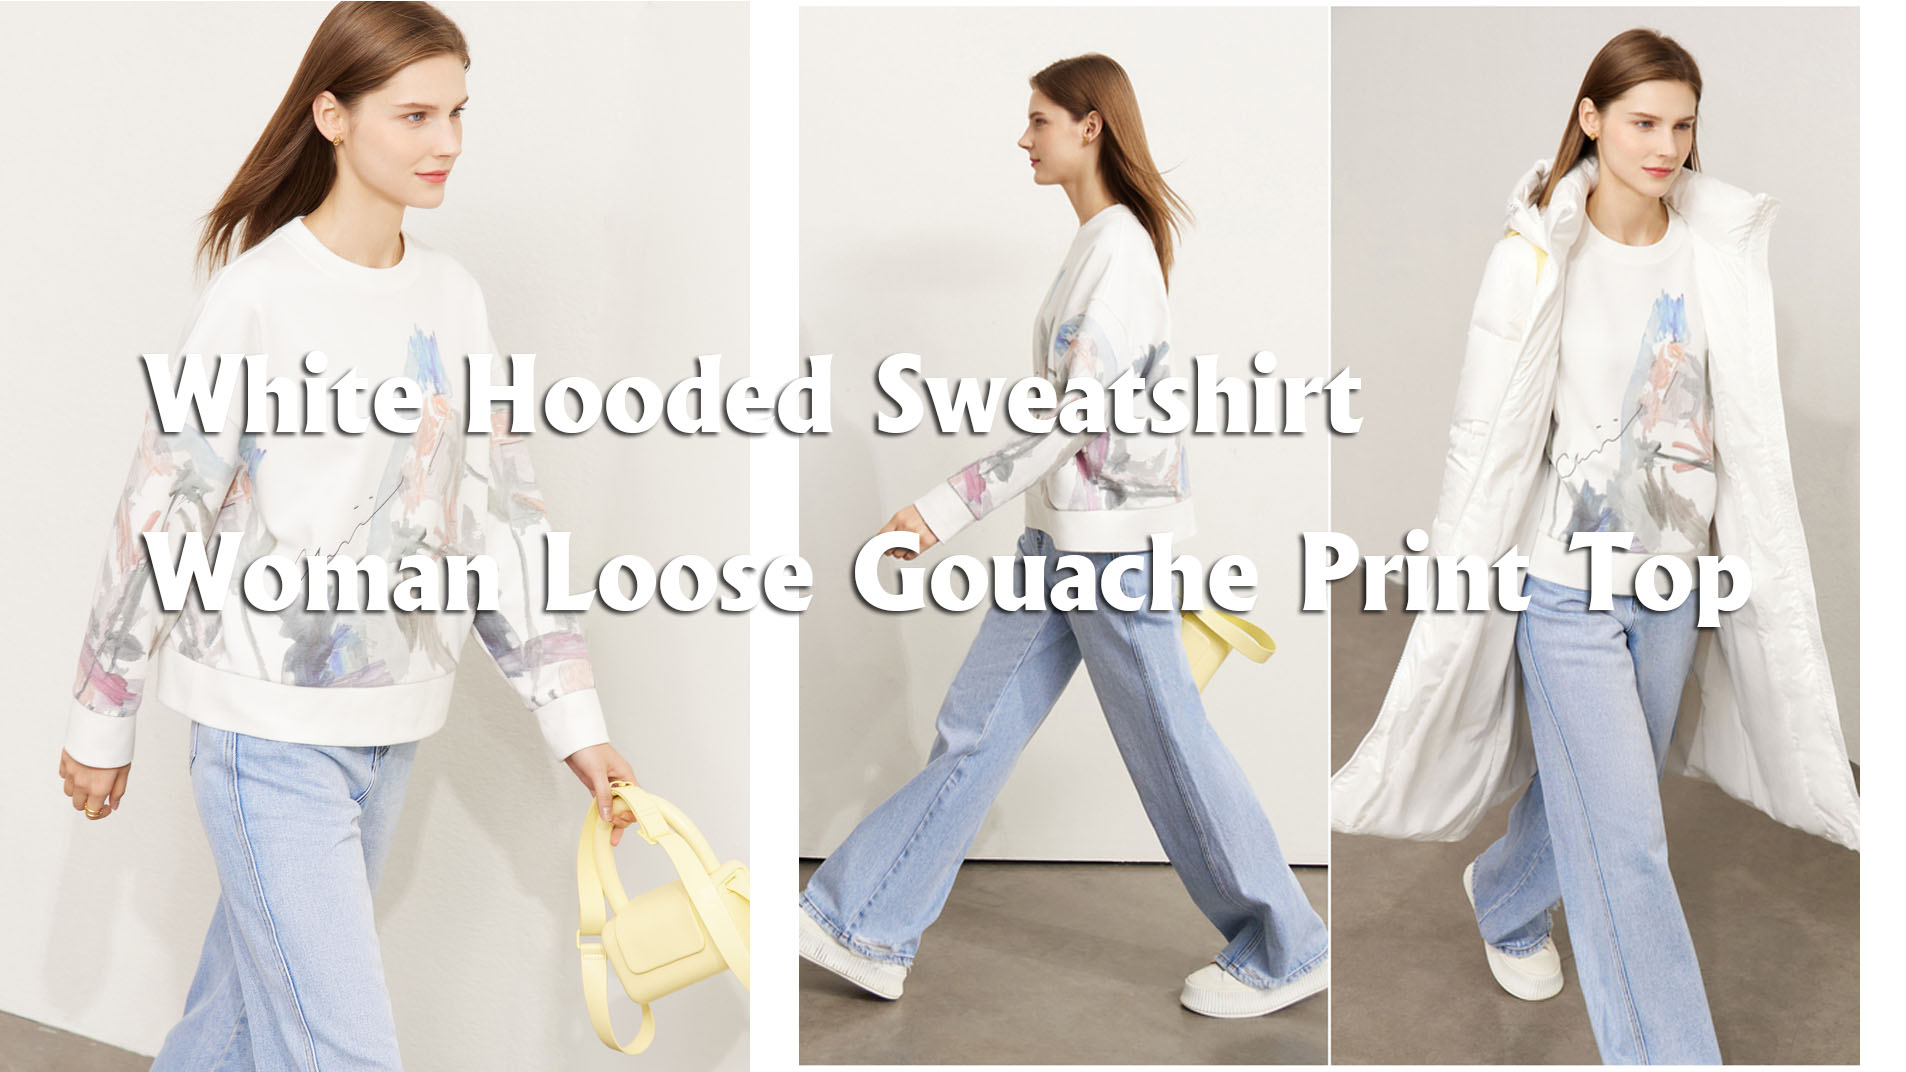 Quality White Hooded Sweatshirt Woman Loose Gouache Print Top Manufacturer |Auschalink